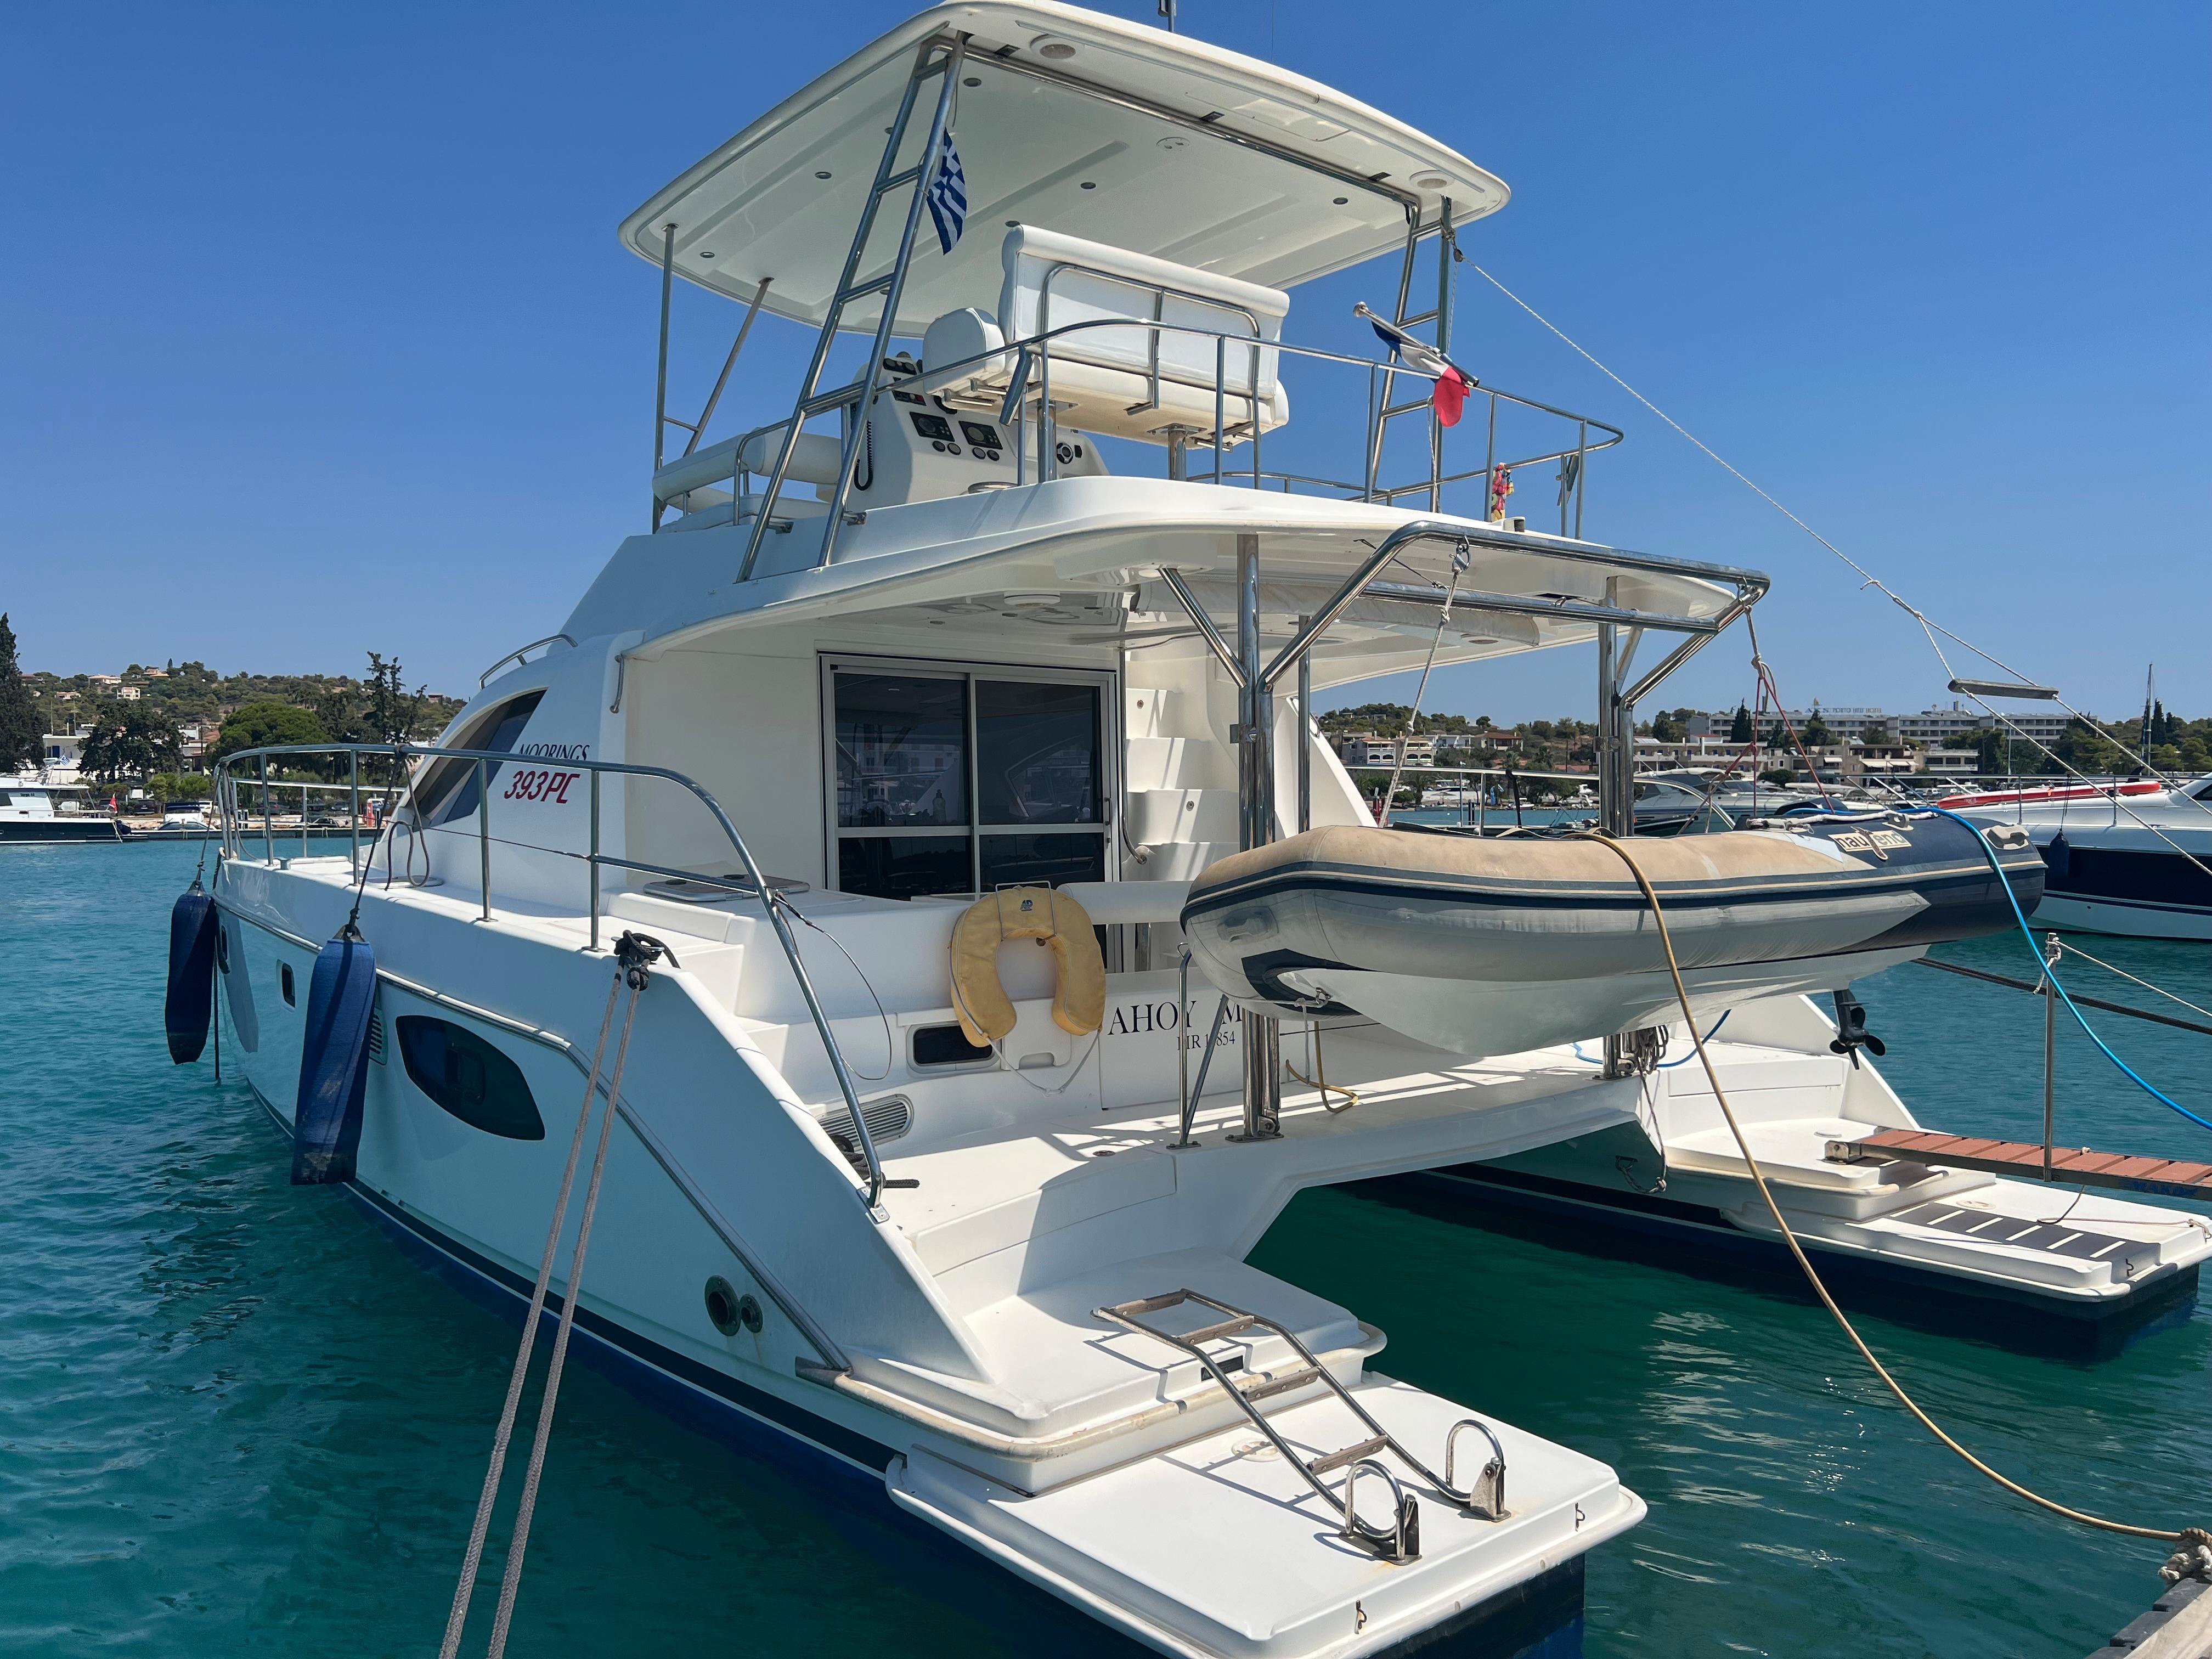 24 ft power catamaran for sale